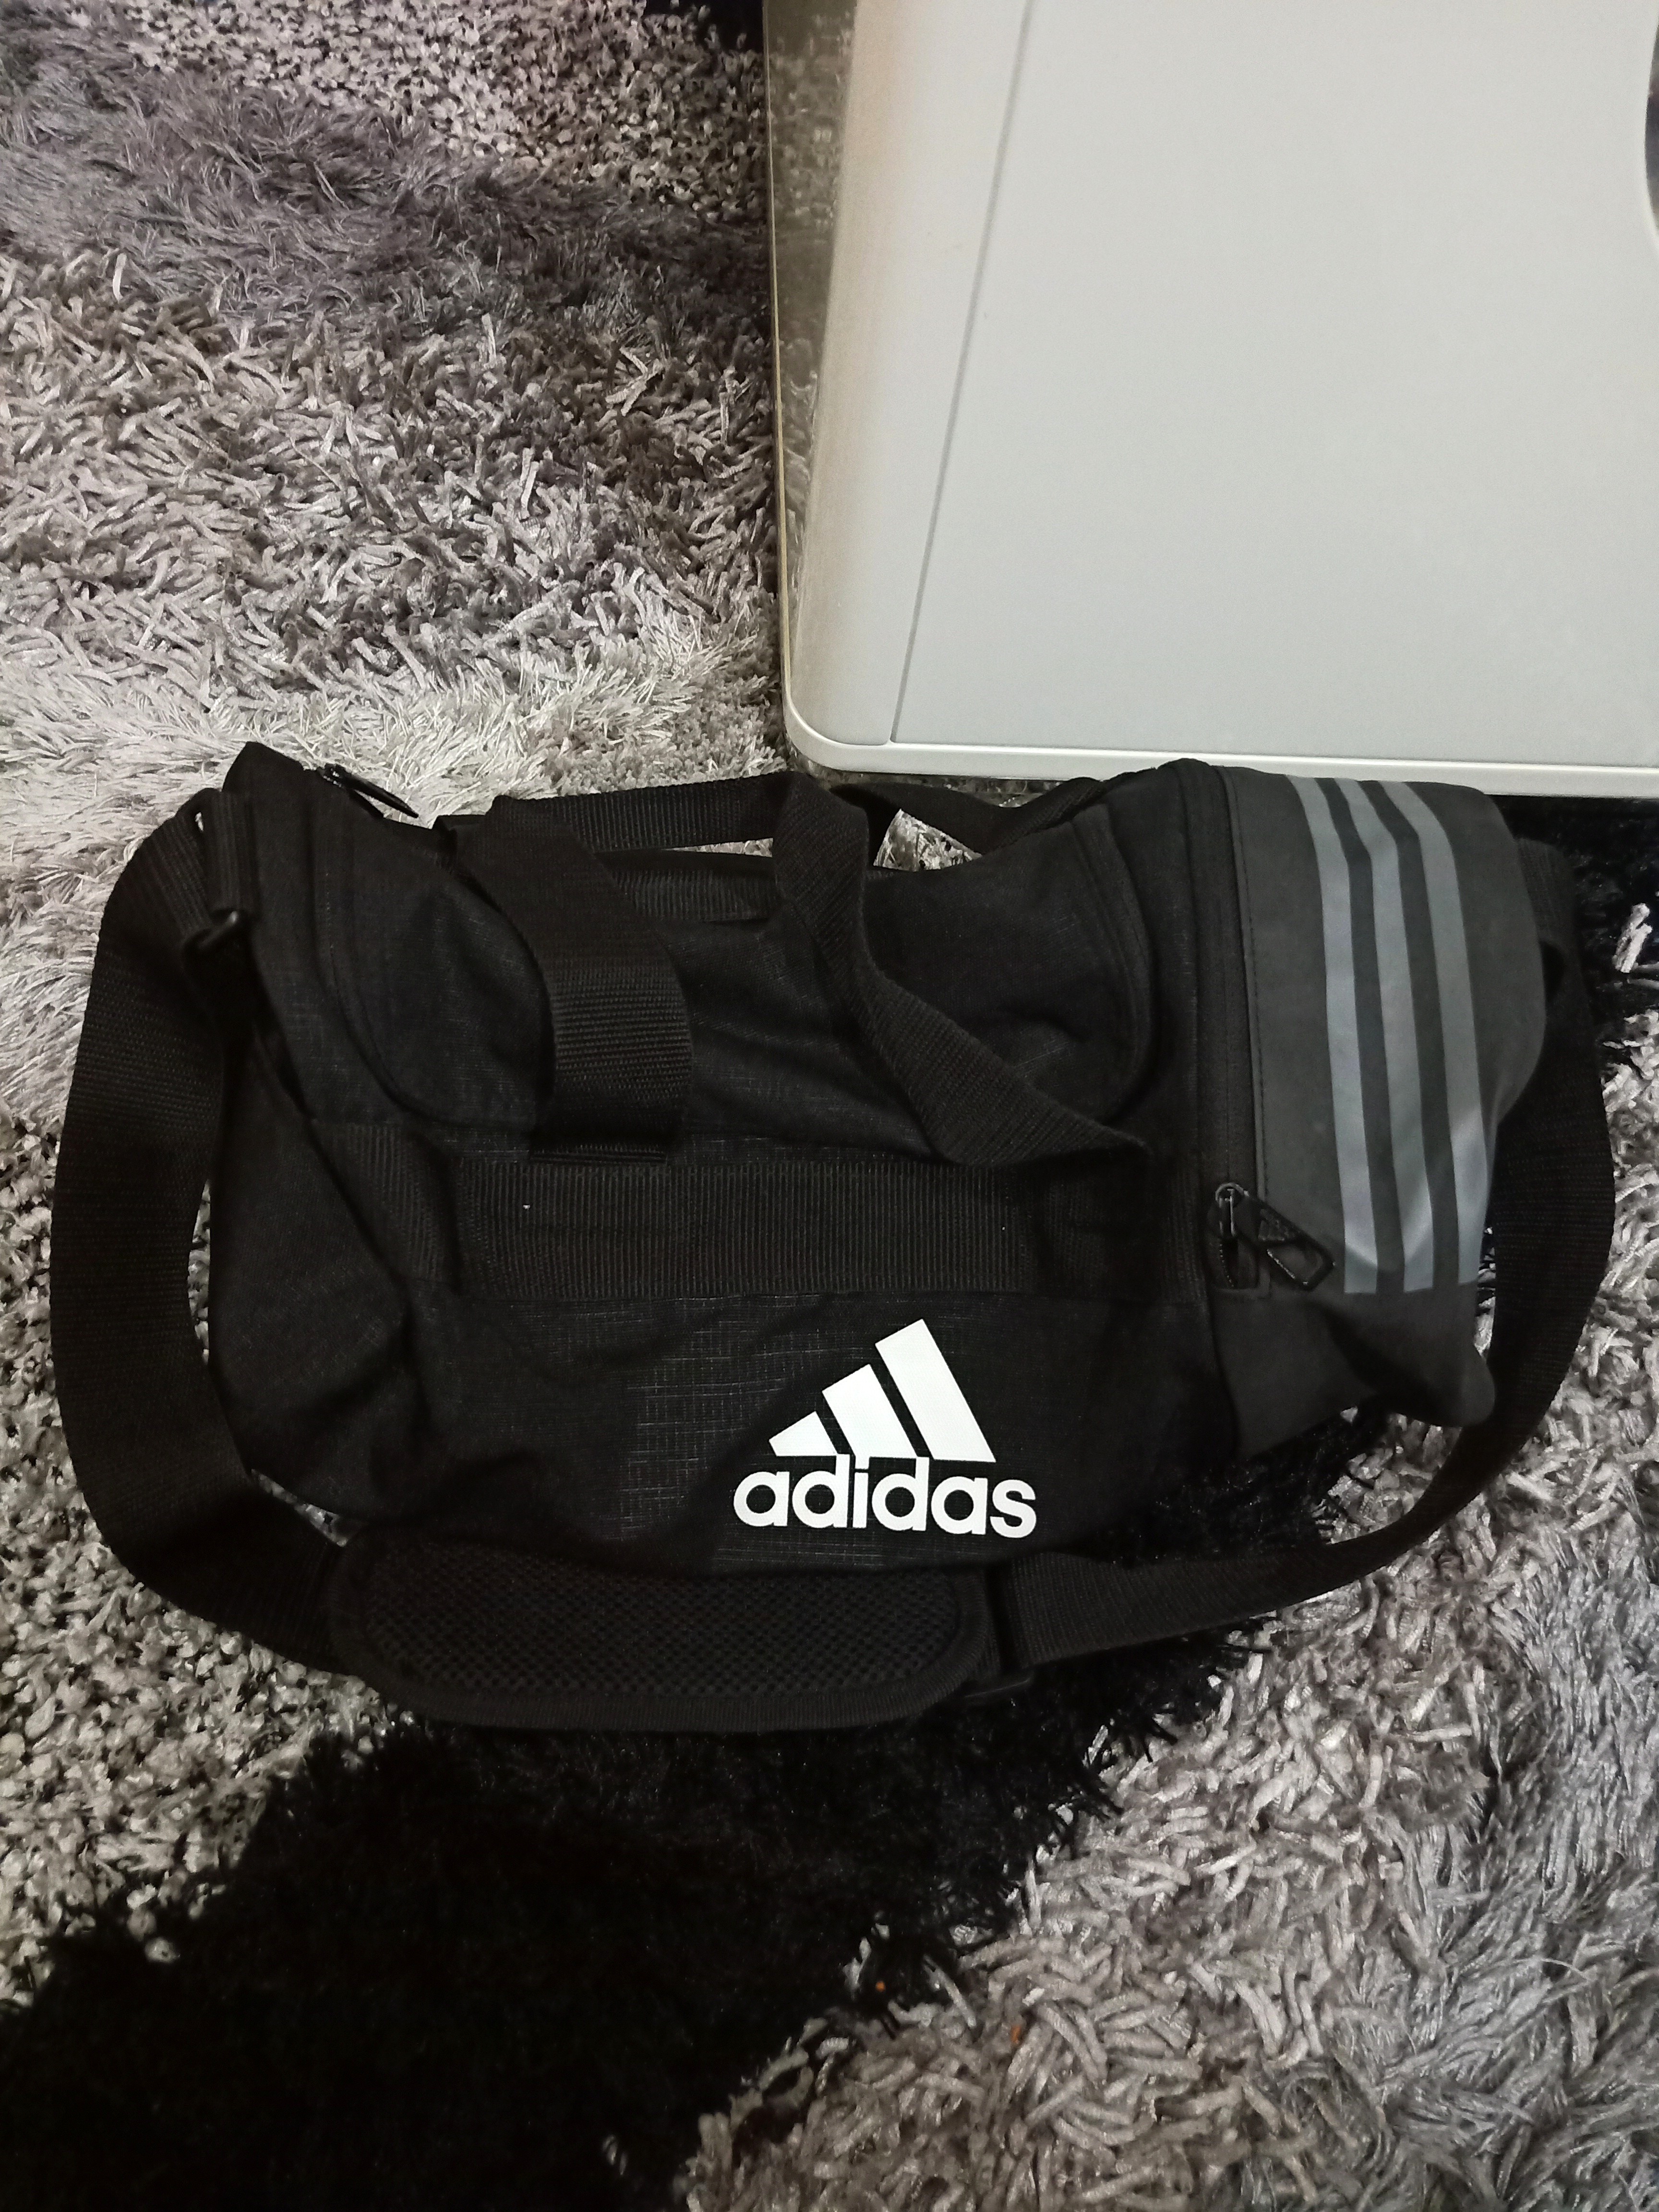 adidas convertible duffel bag small